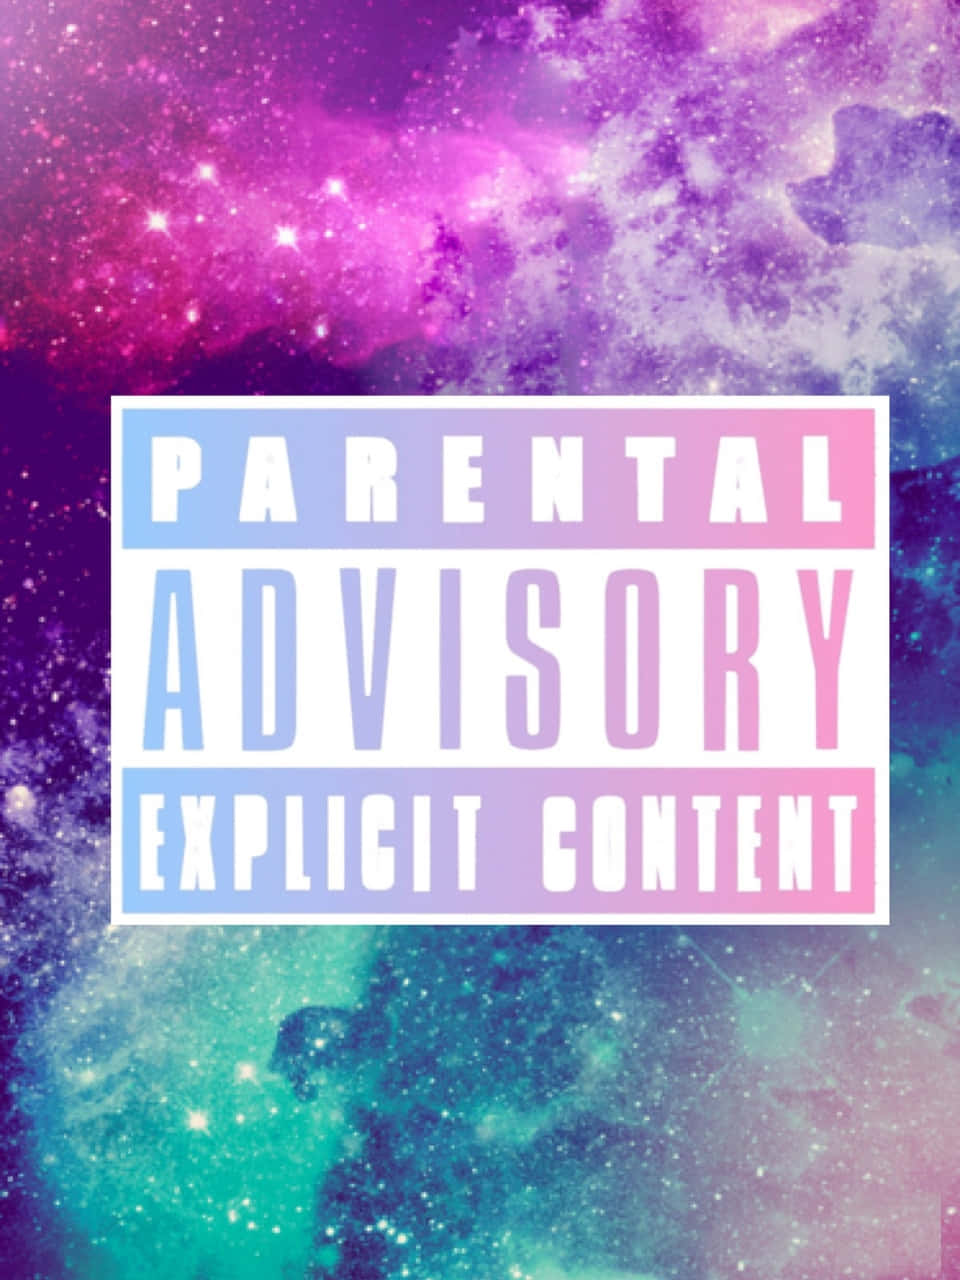 Parental Advisory Galaxy Wallpaper